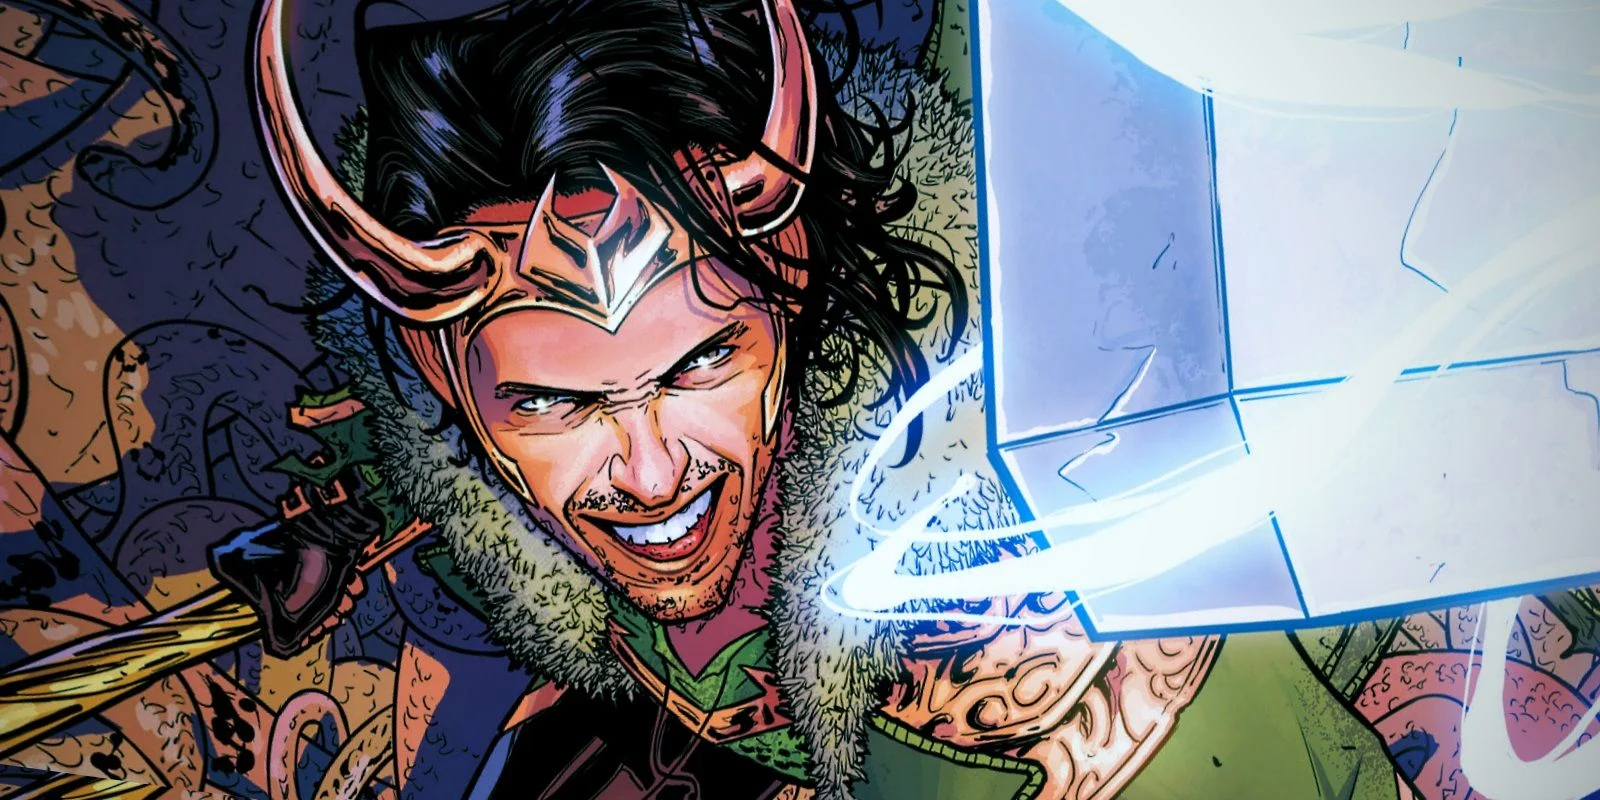 Loki once managed to lift Thor's Mjolnir